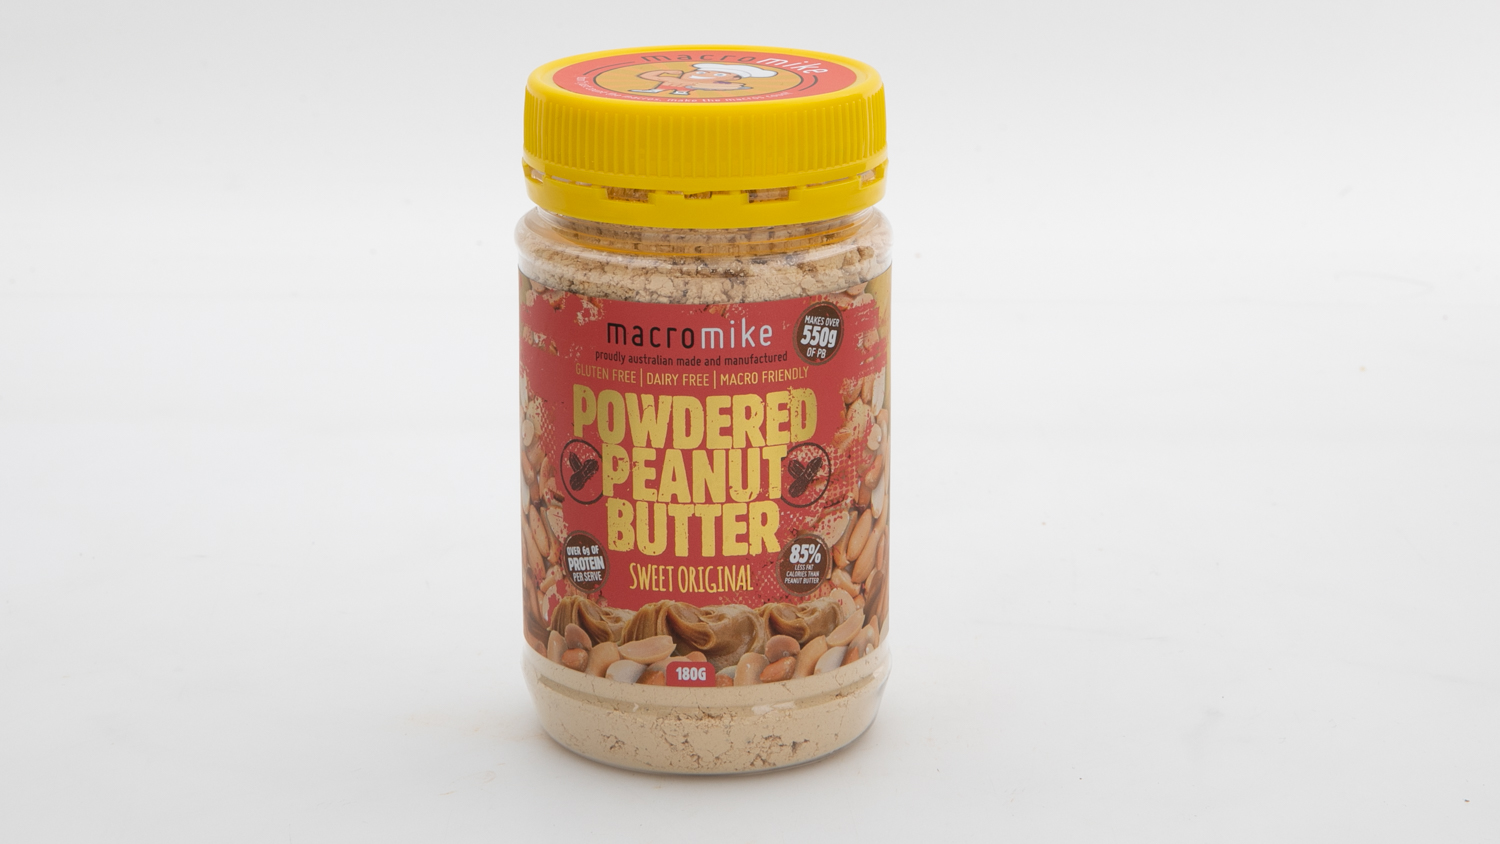 Macro Mikes Powdered Peanut Butter Sweet Original carousel image